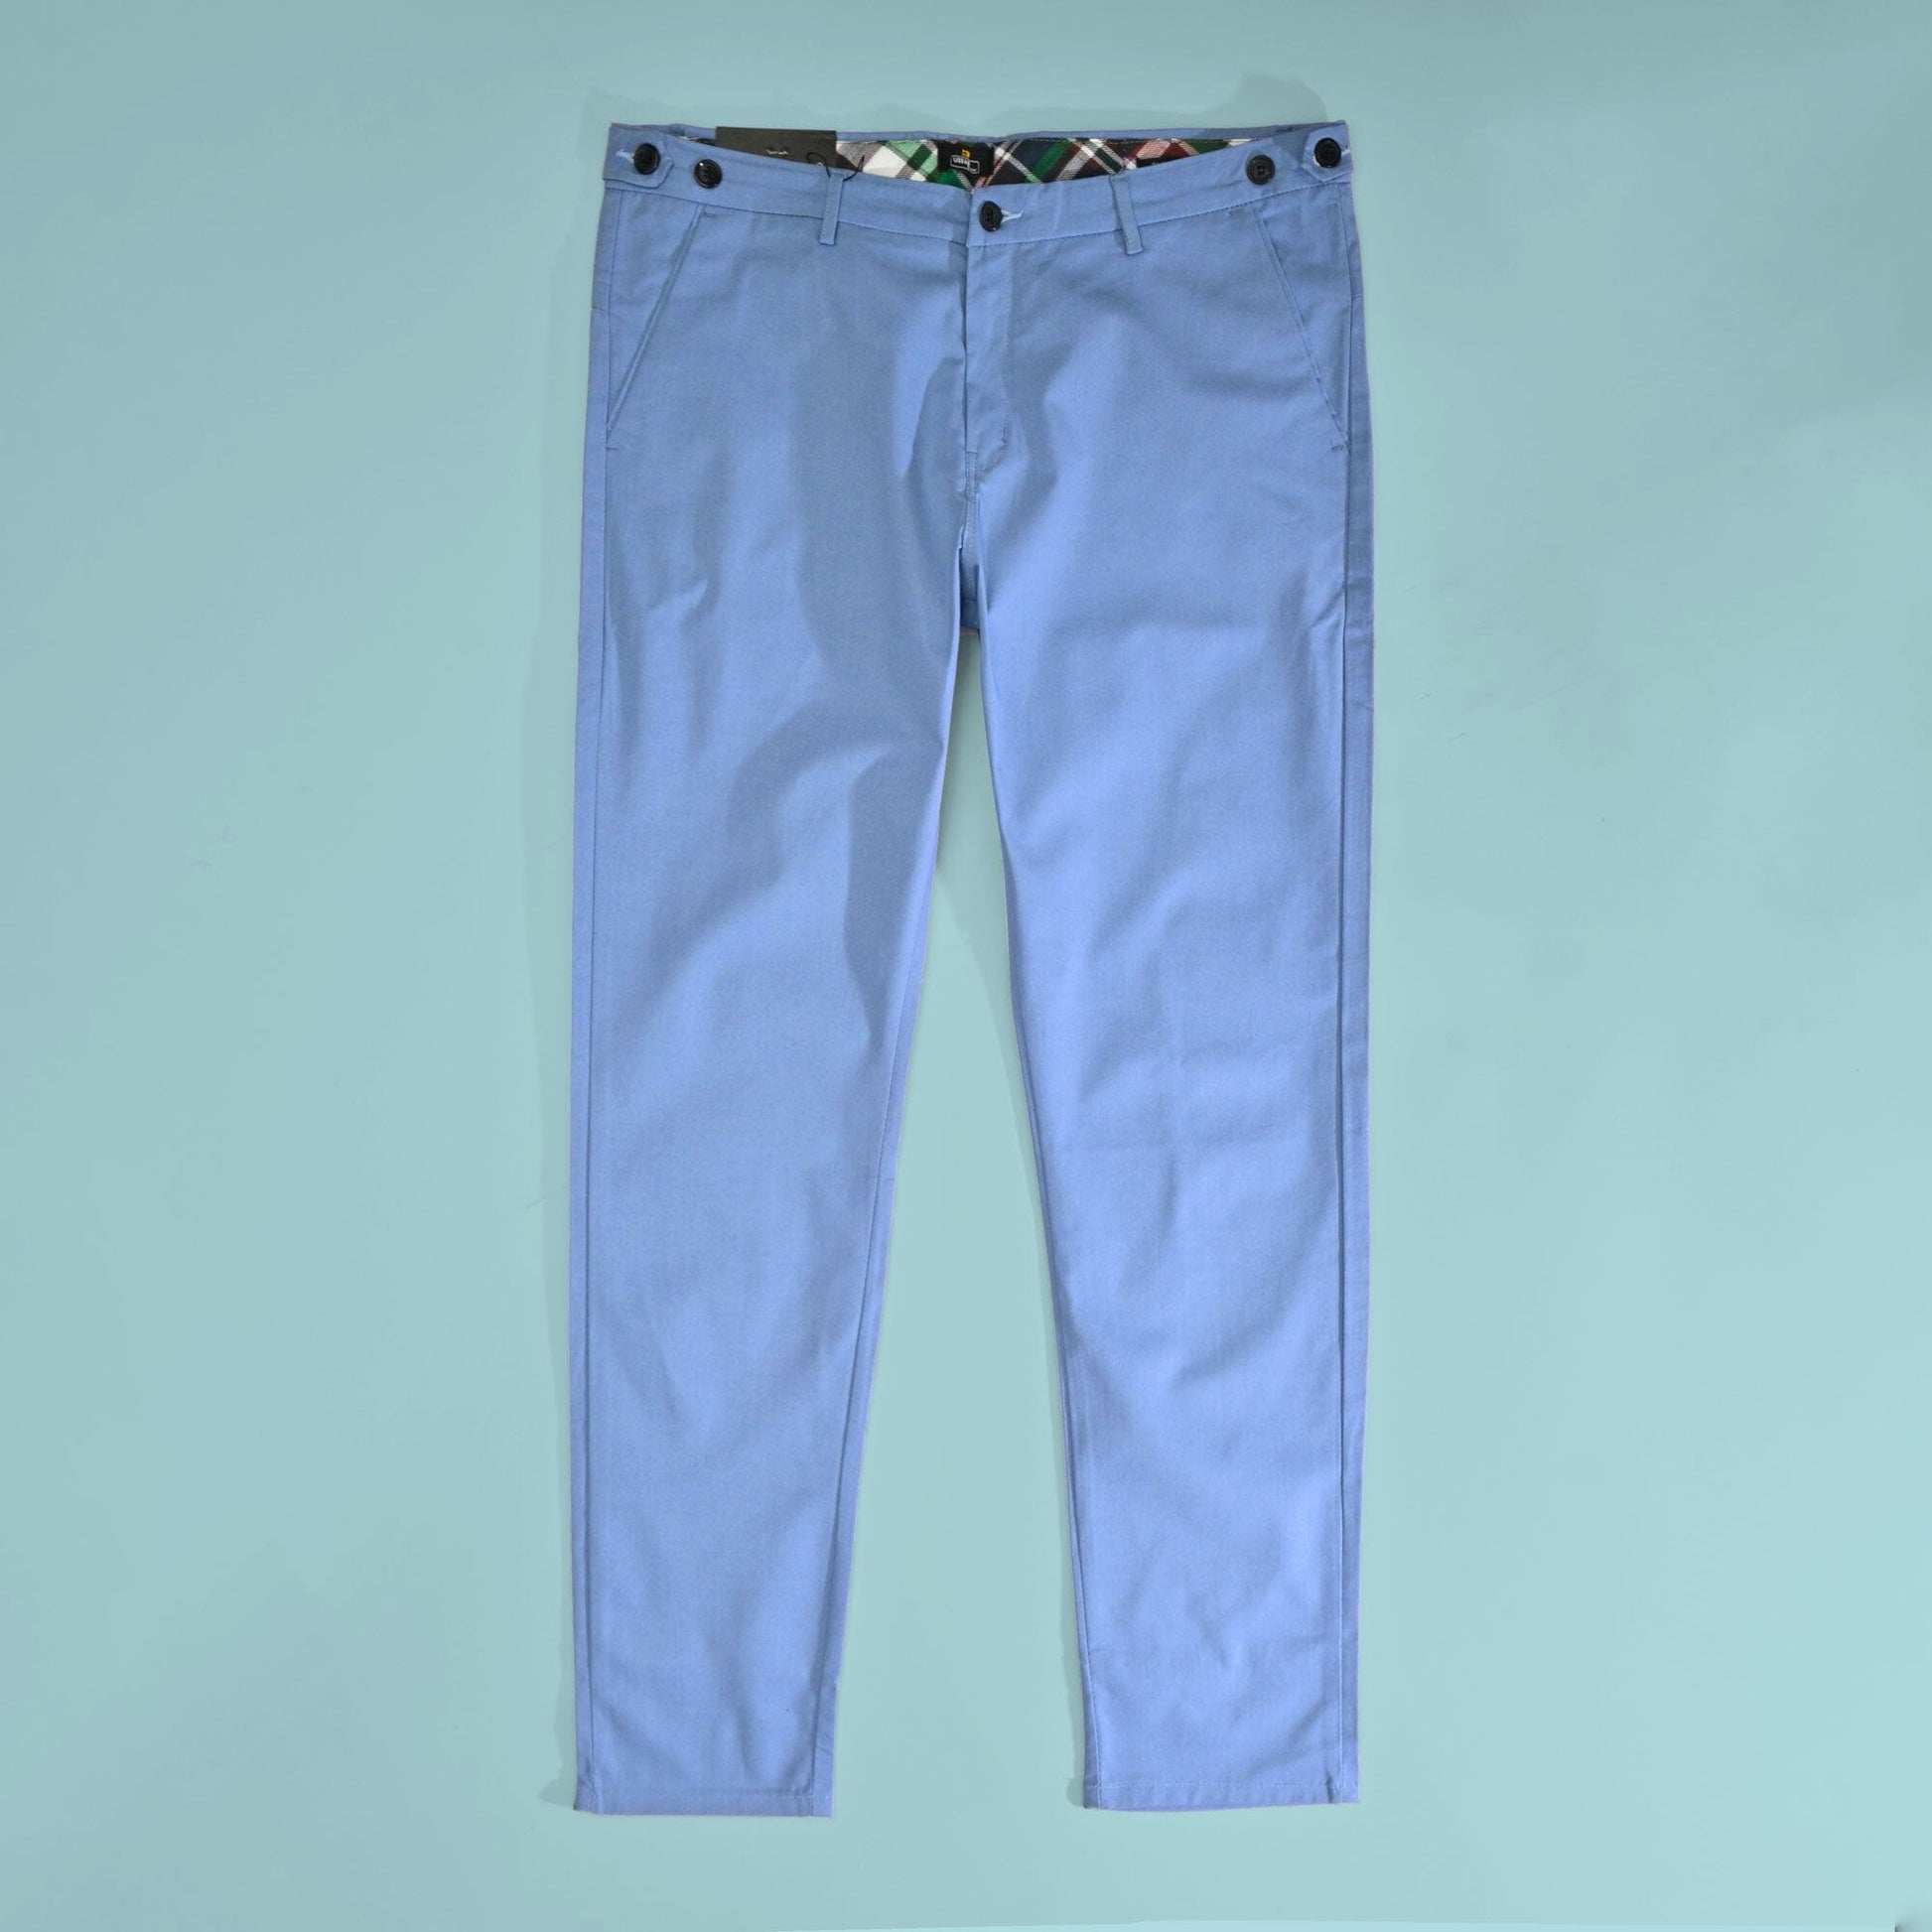 Urban Look Men's Slim Fit Chino Pants Men's Chino First Choice 